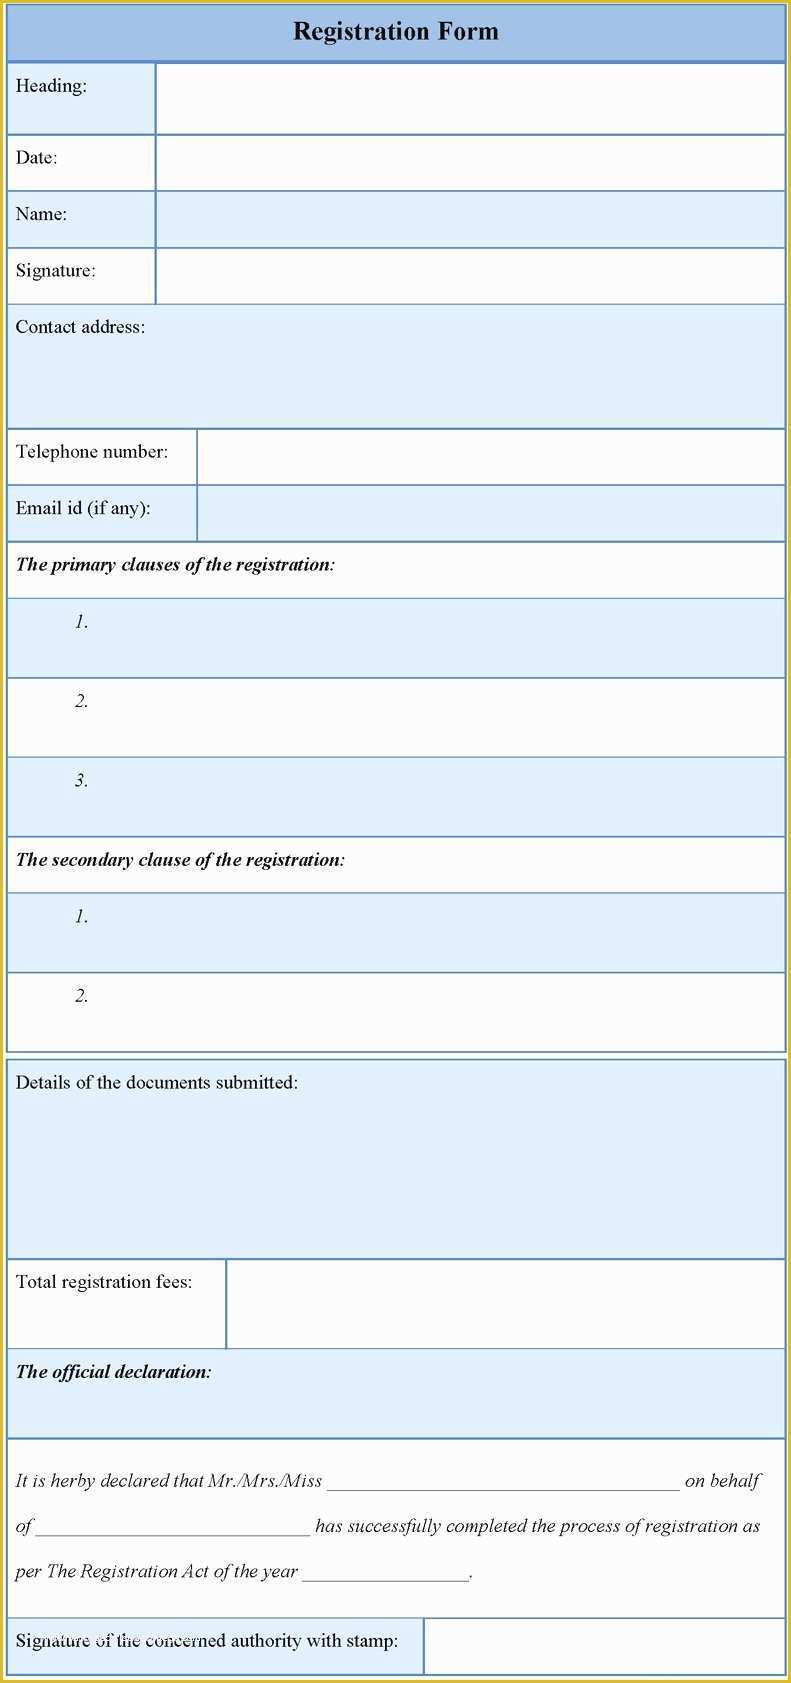 5k Registration form Template Free Of Registration forms Template Free Useful 5k Registration